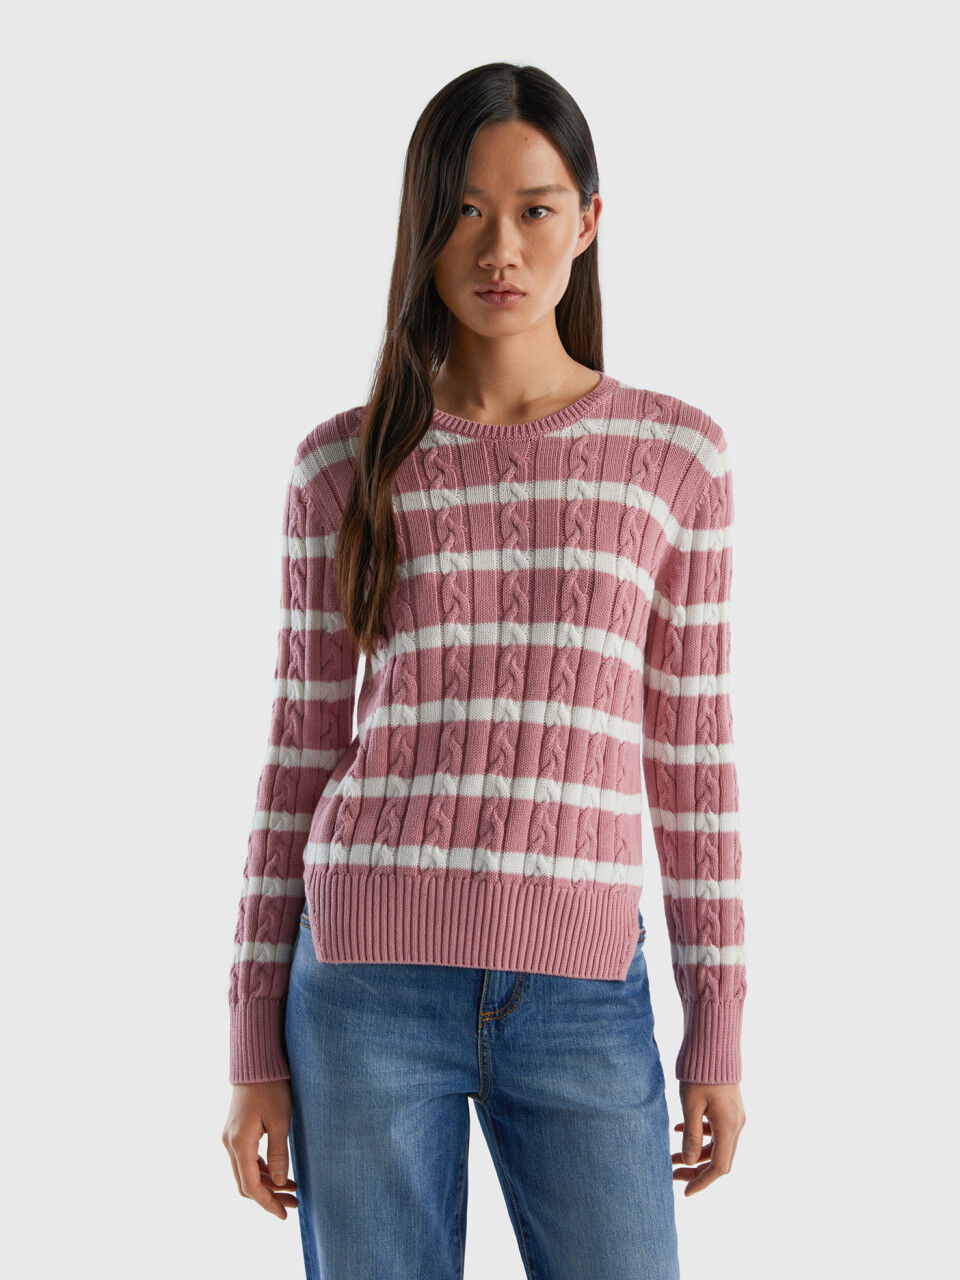 Striped 100% cotton sweater